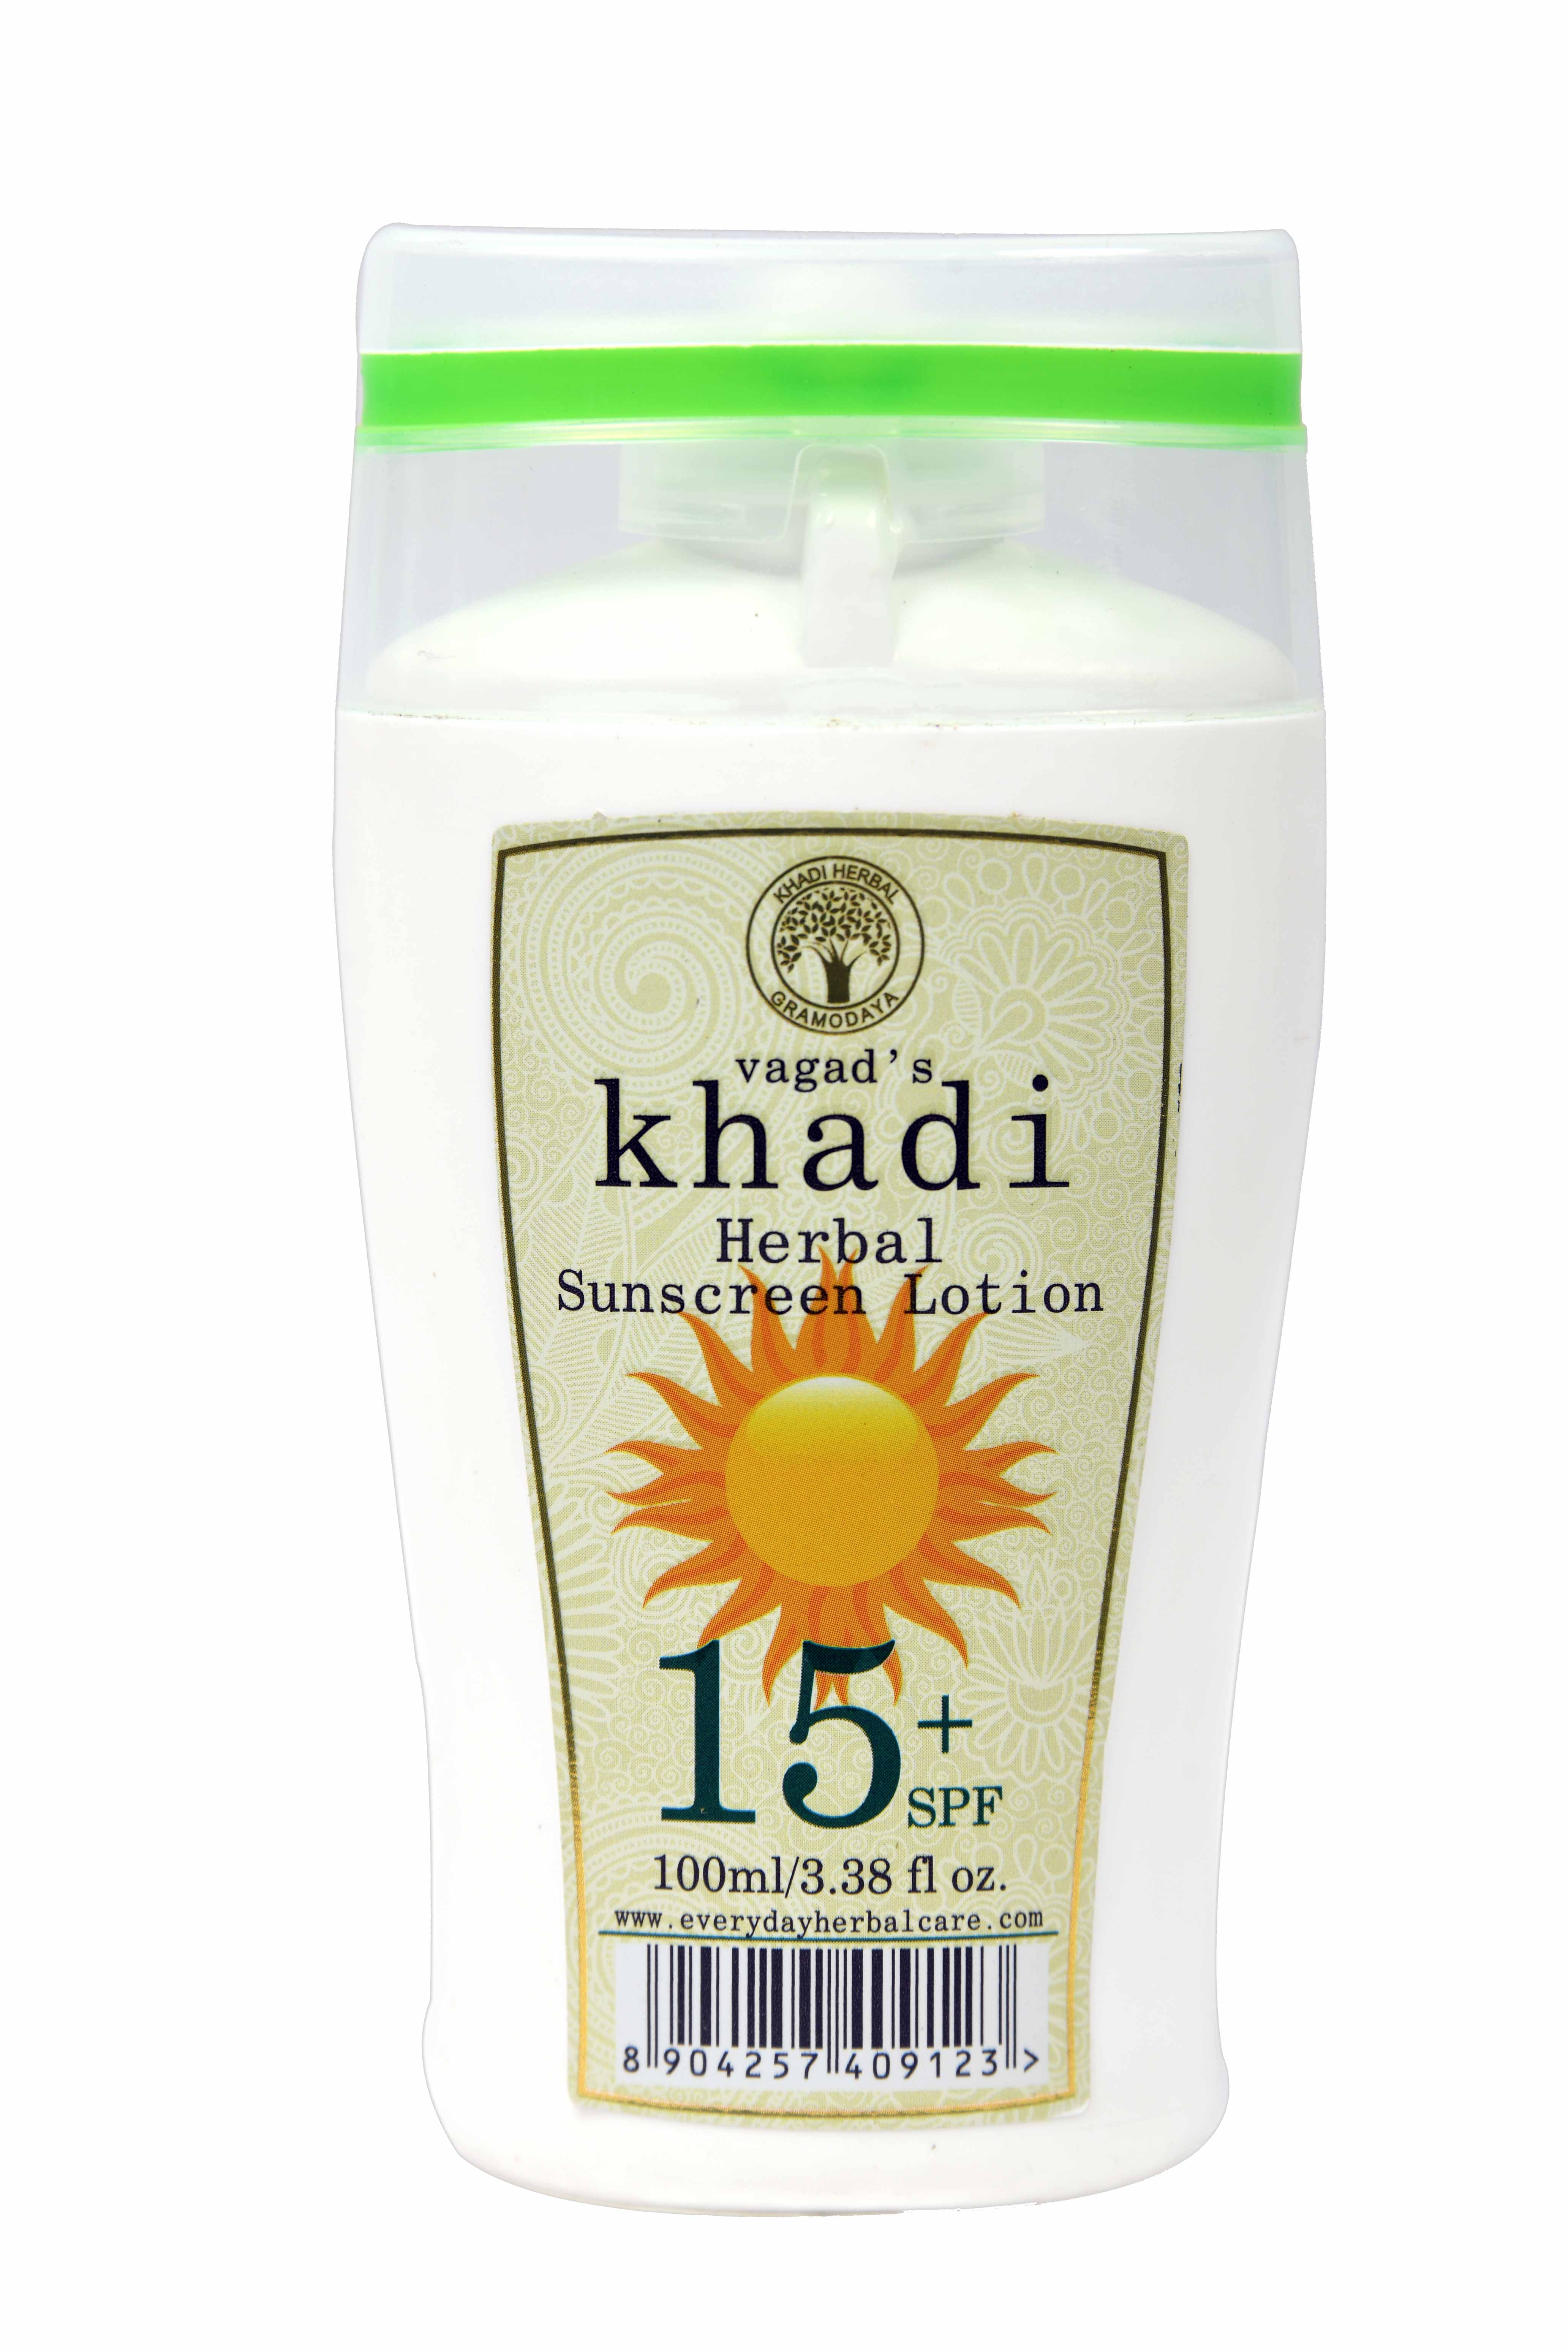 Buy Vagad's Khadi Spf 15 Sunscreen Lotion at Best Price Online